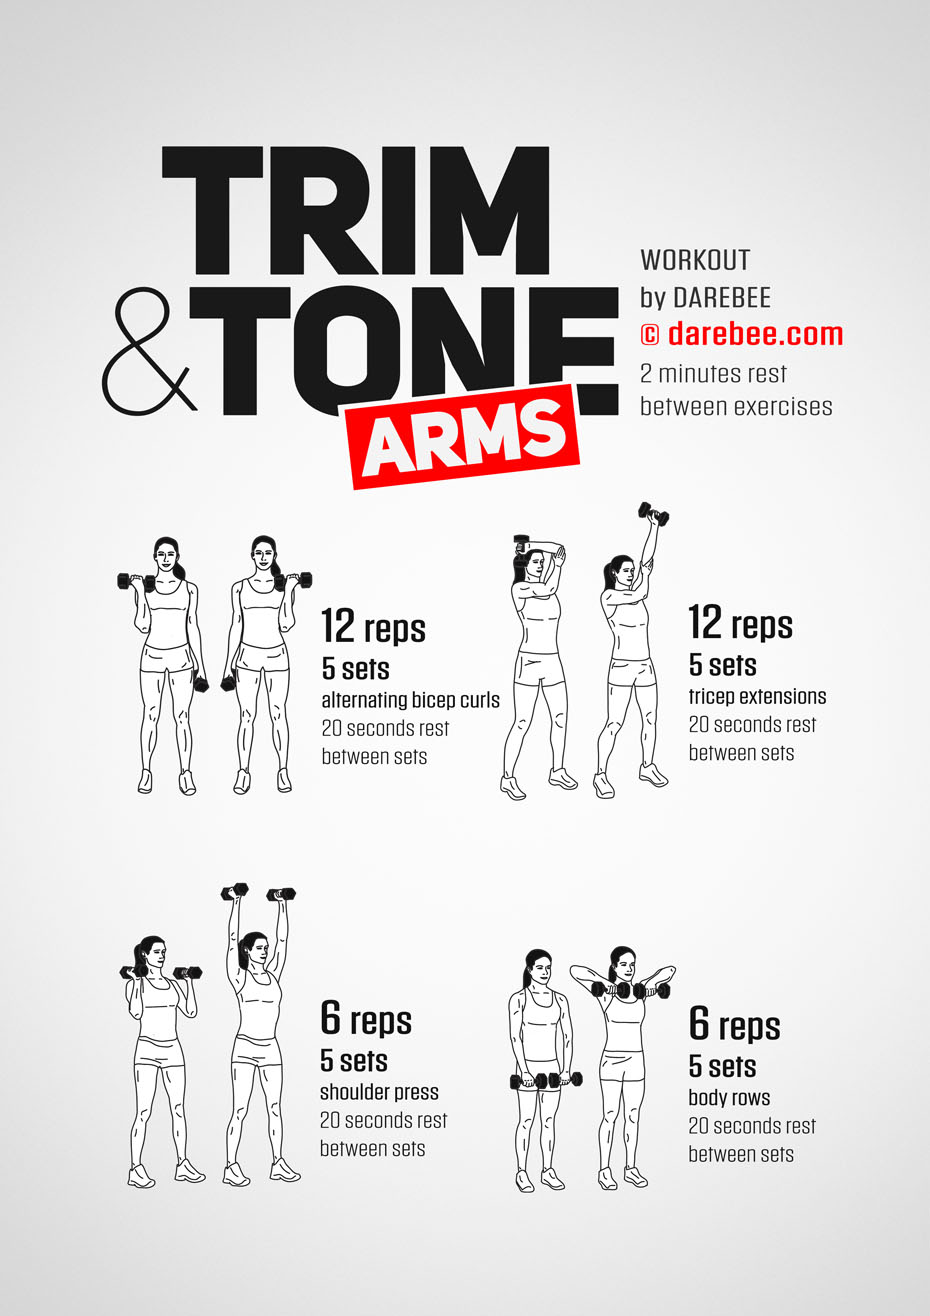 Trim Tone Arms Workout